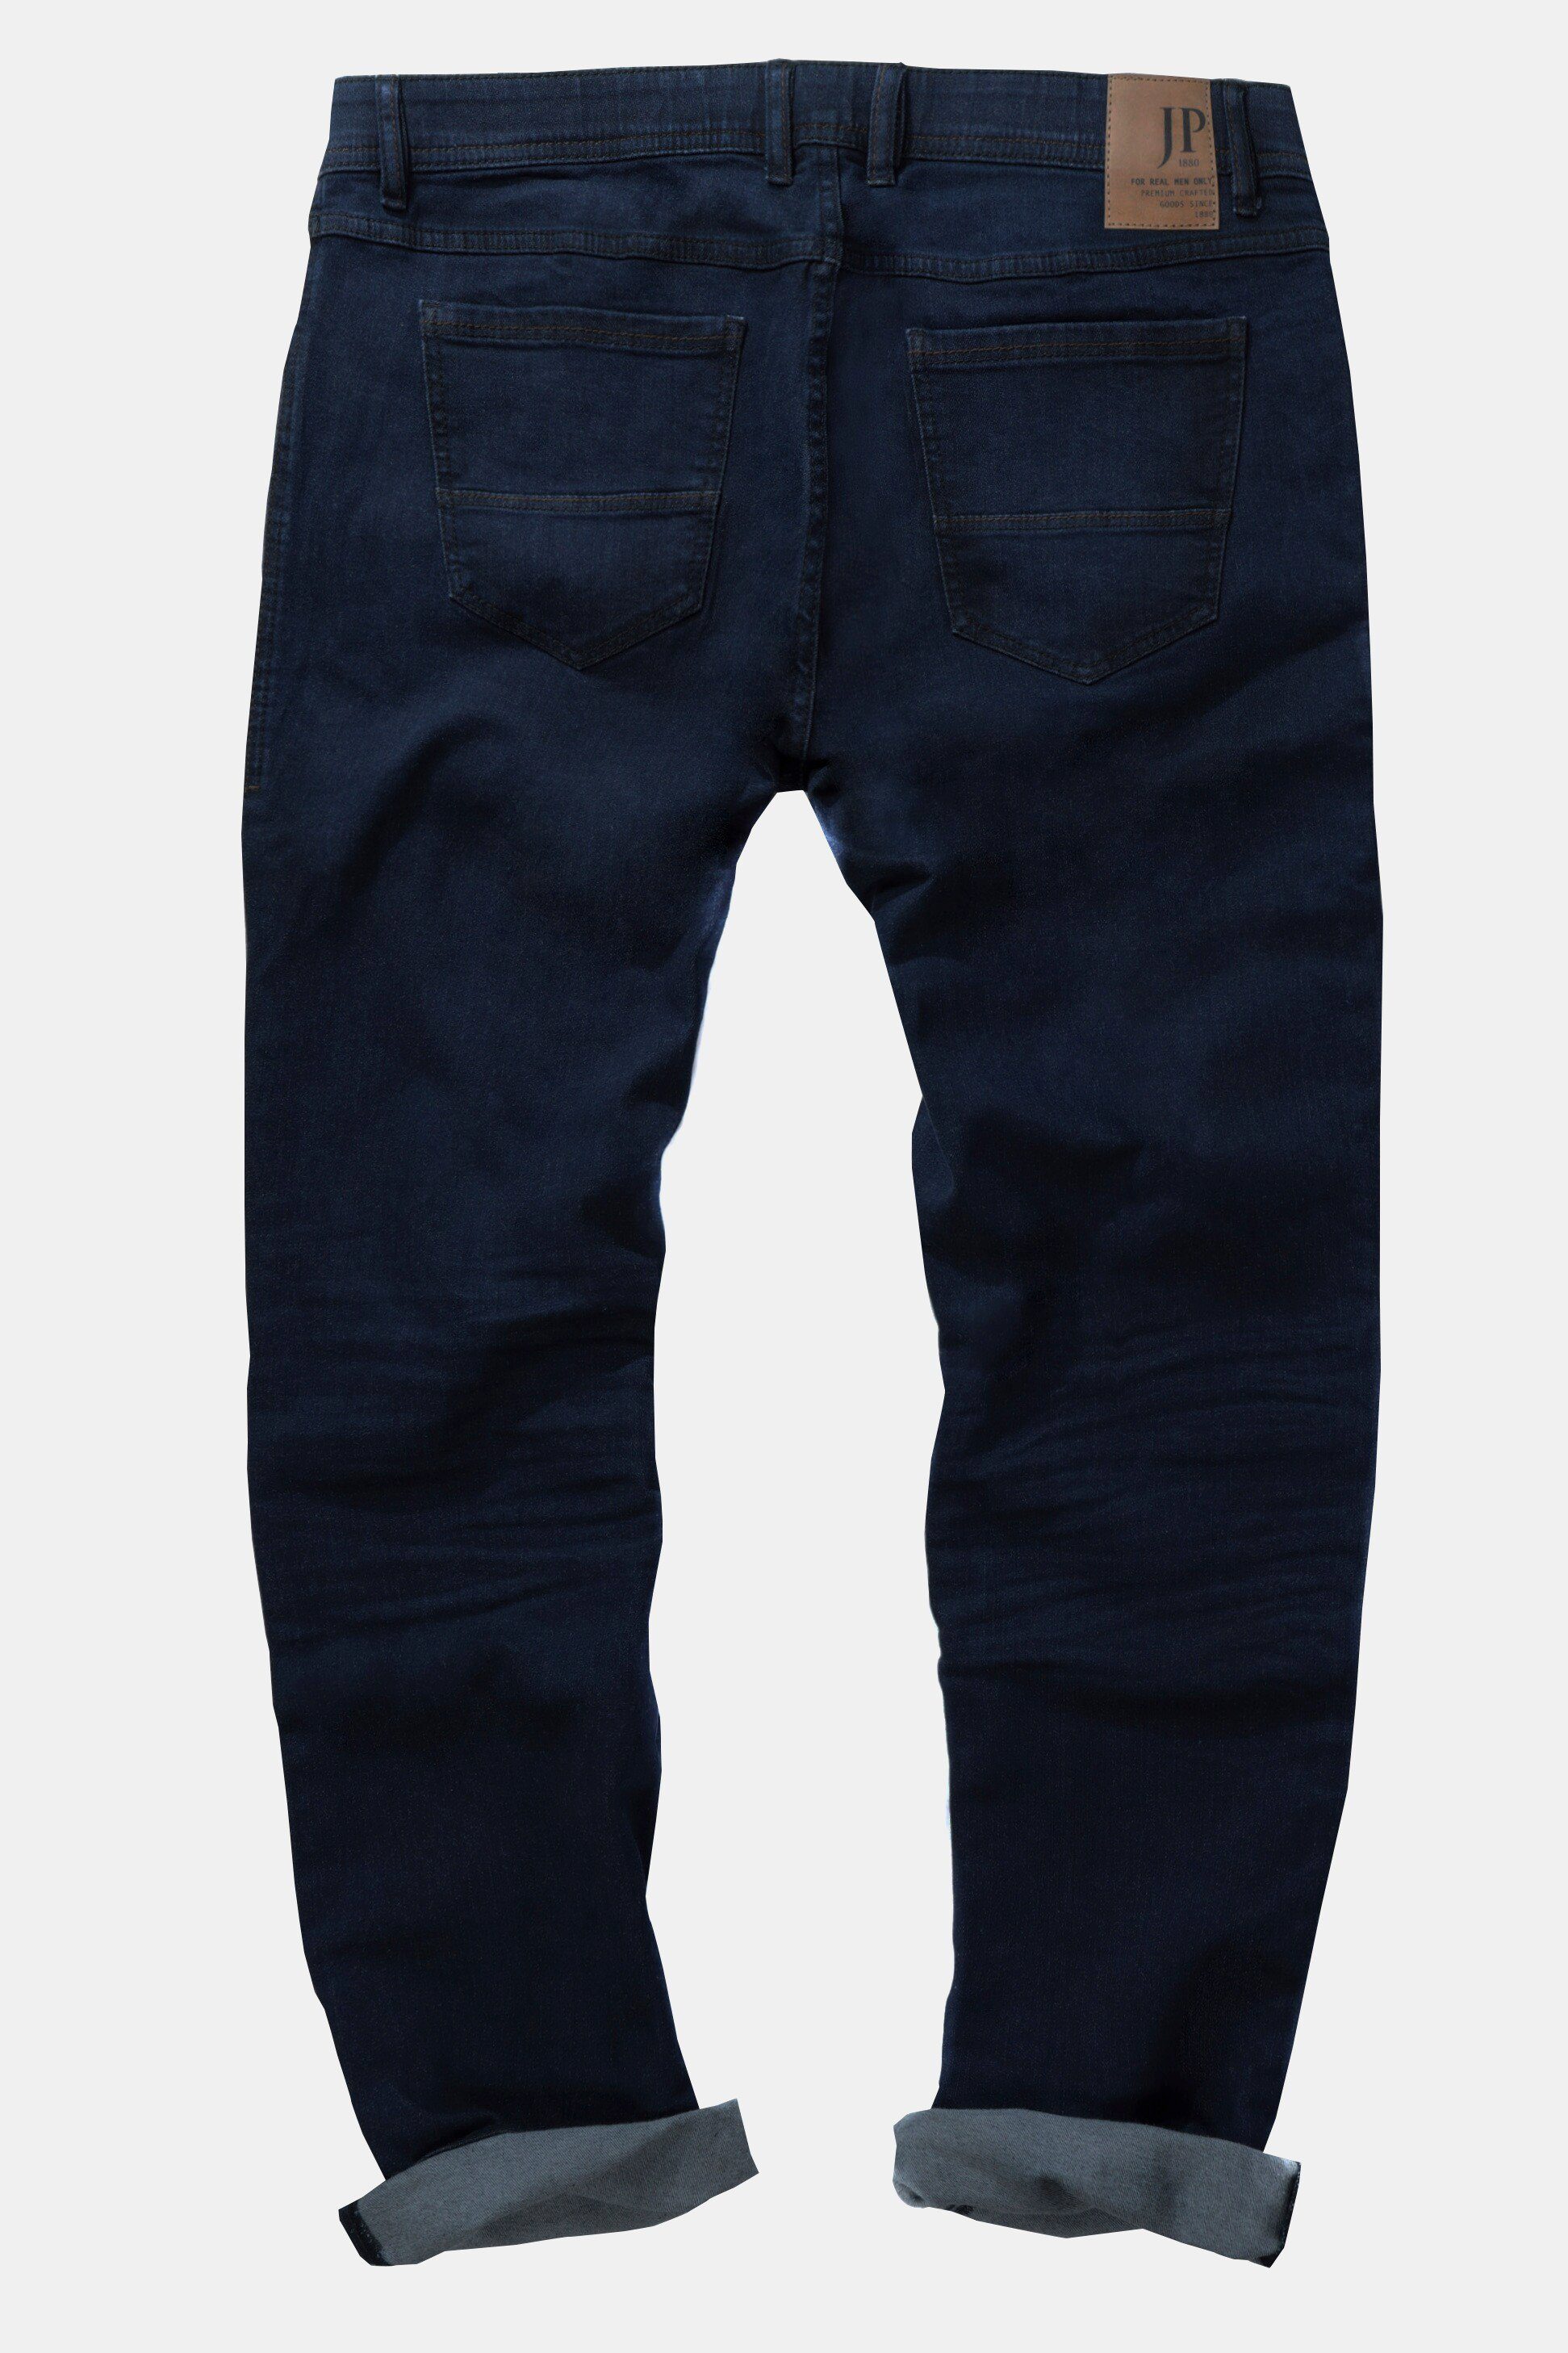 bis 70/35 Bauchfit Gr. dark Denim Jeans denim Cargohose blue JP1880